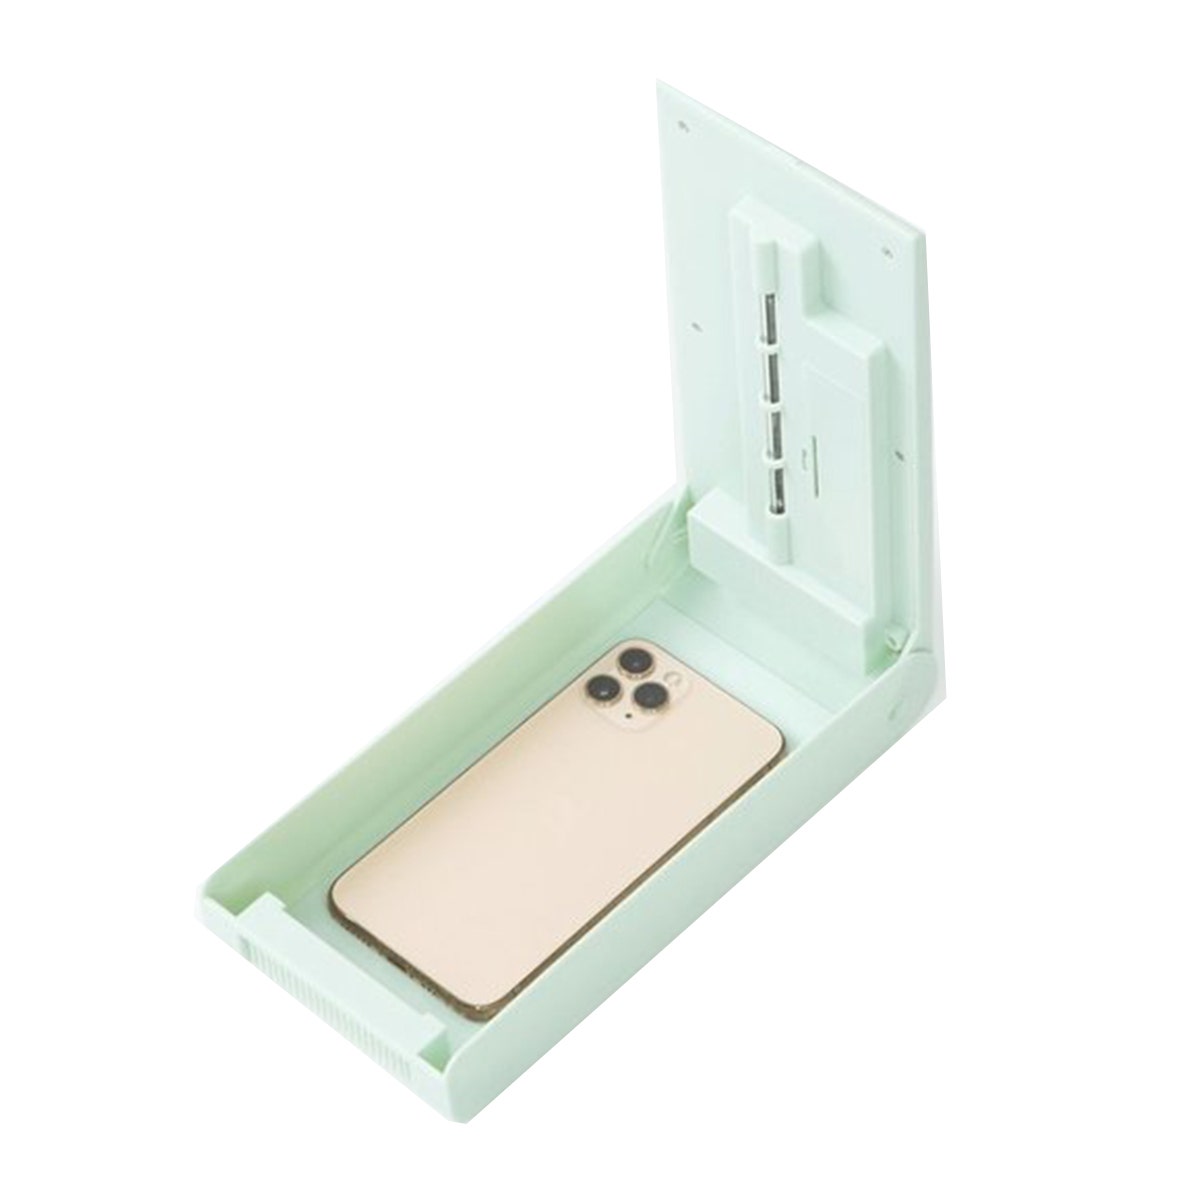 Tech Candy UV Light Sanitizer Box – Kill Germs, Disinfect Phone